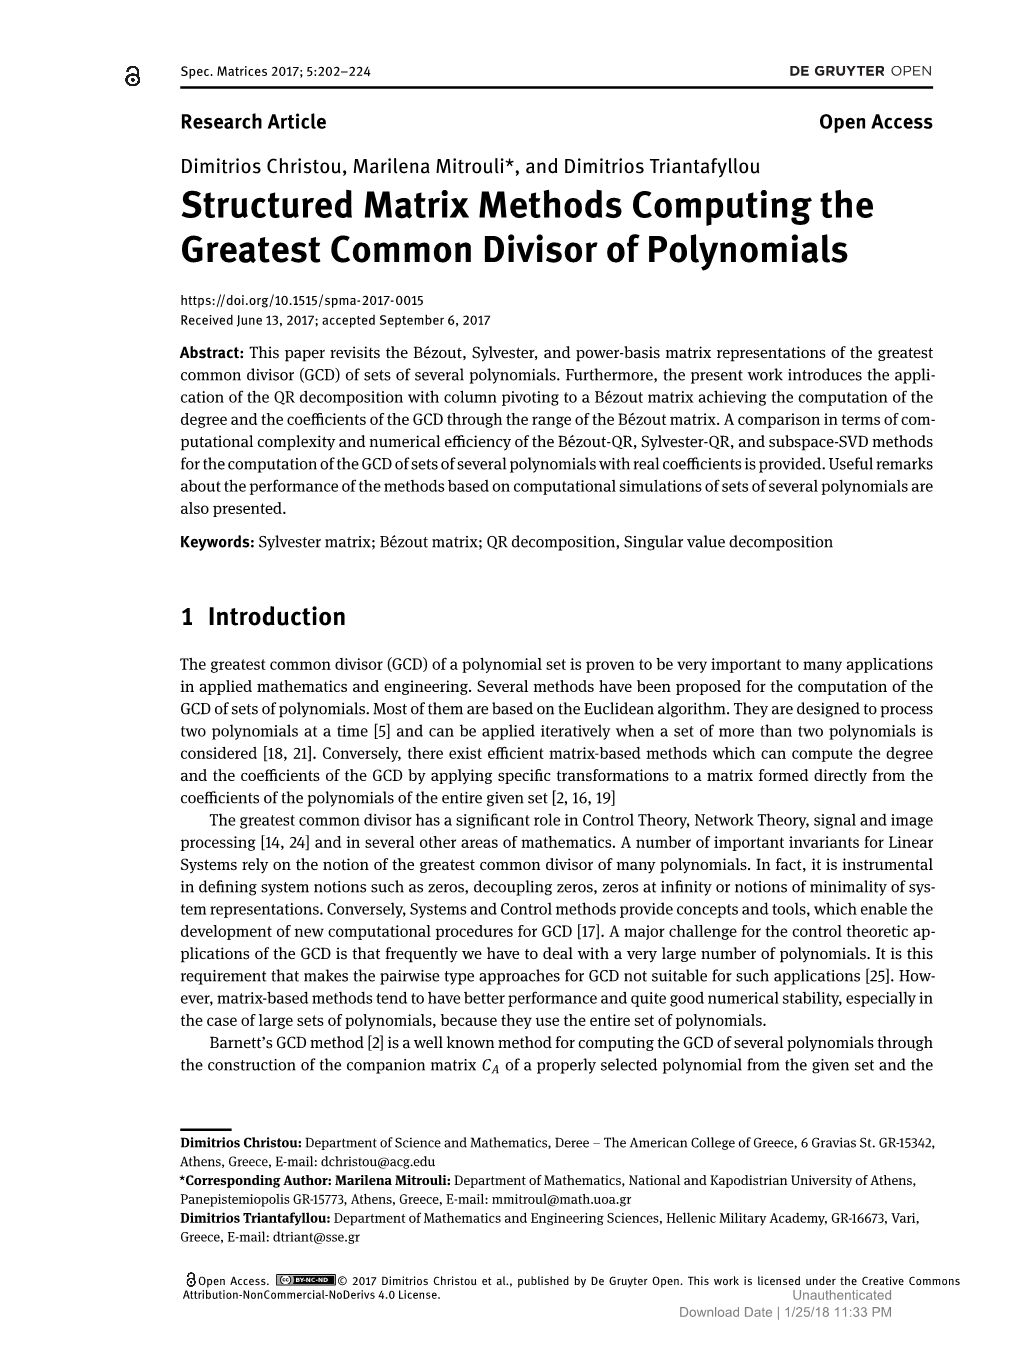 Structured Matrix Methods Computing the Greatest Common Divisor Of